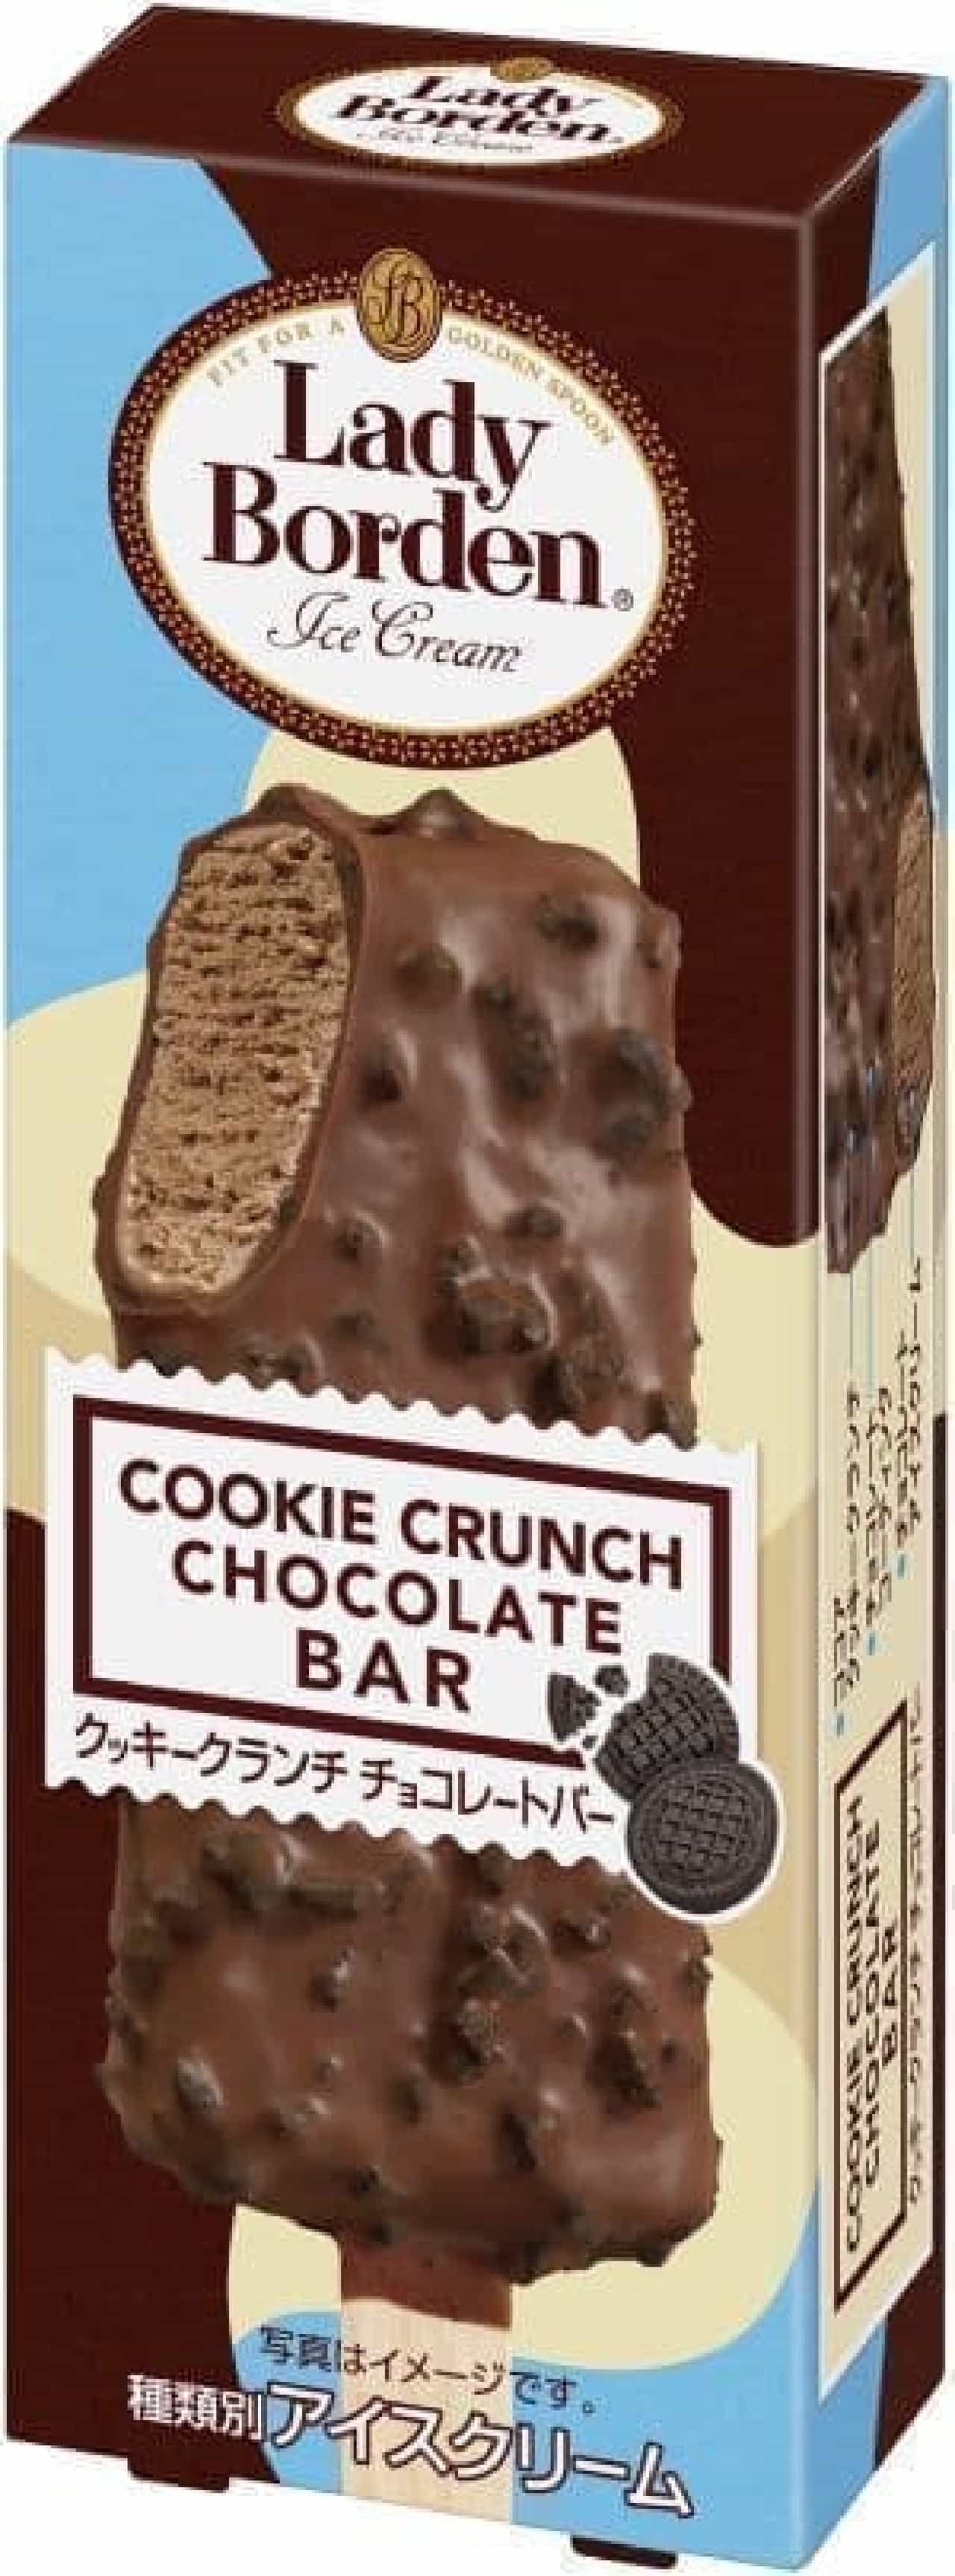 Lady Borden Cookie Crunch Chocolate Bar